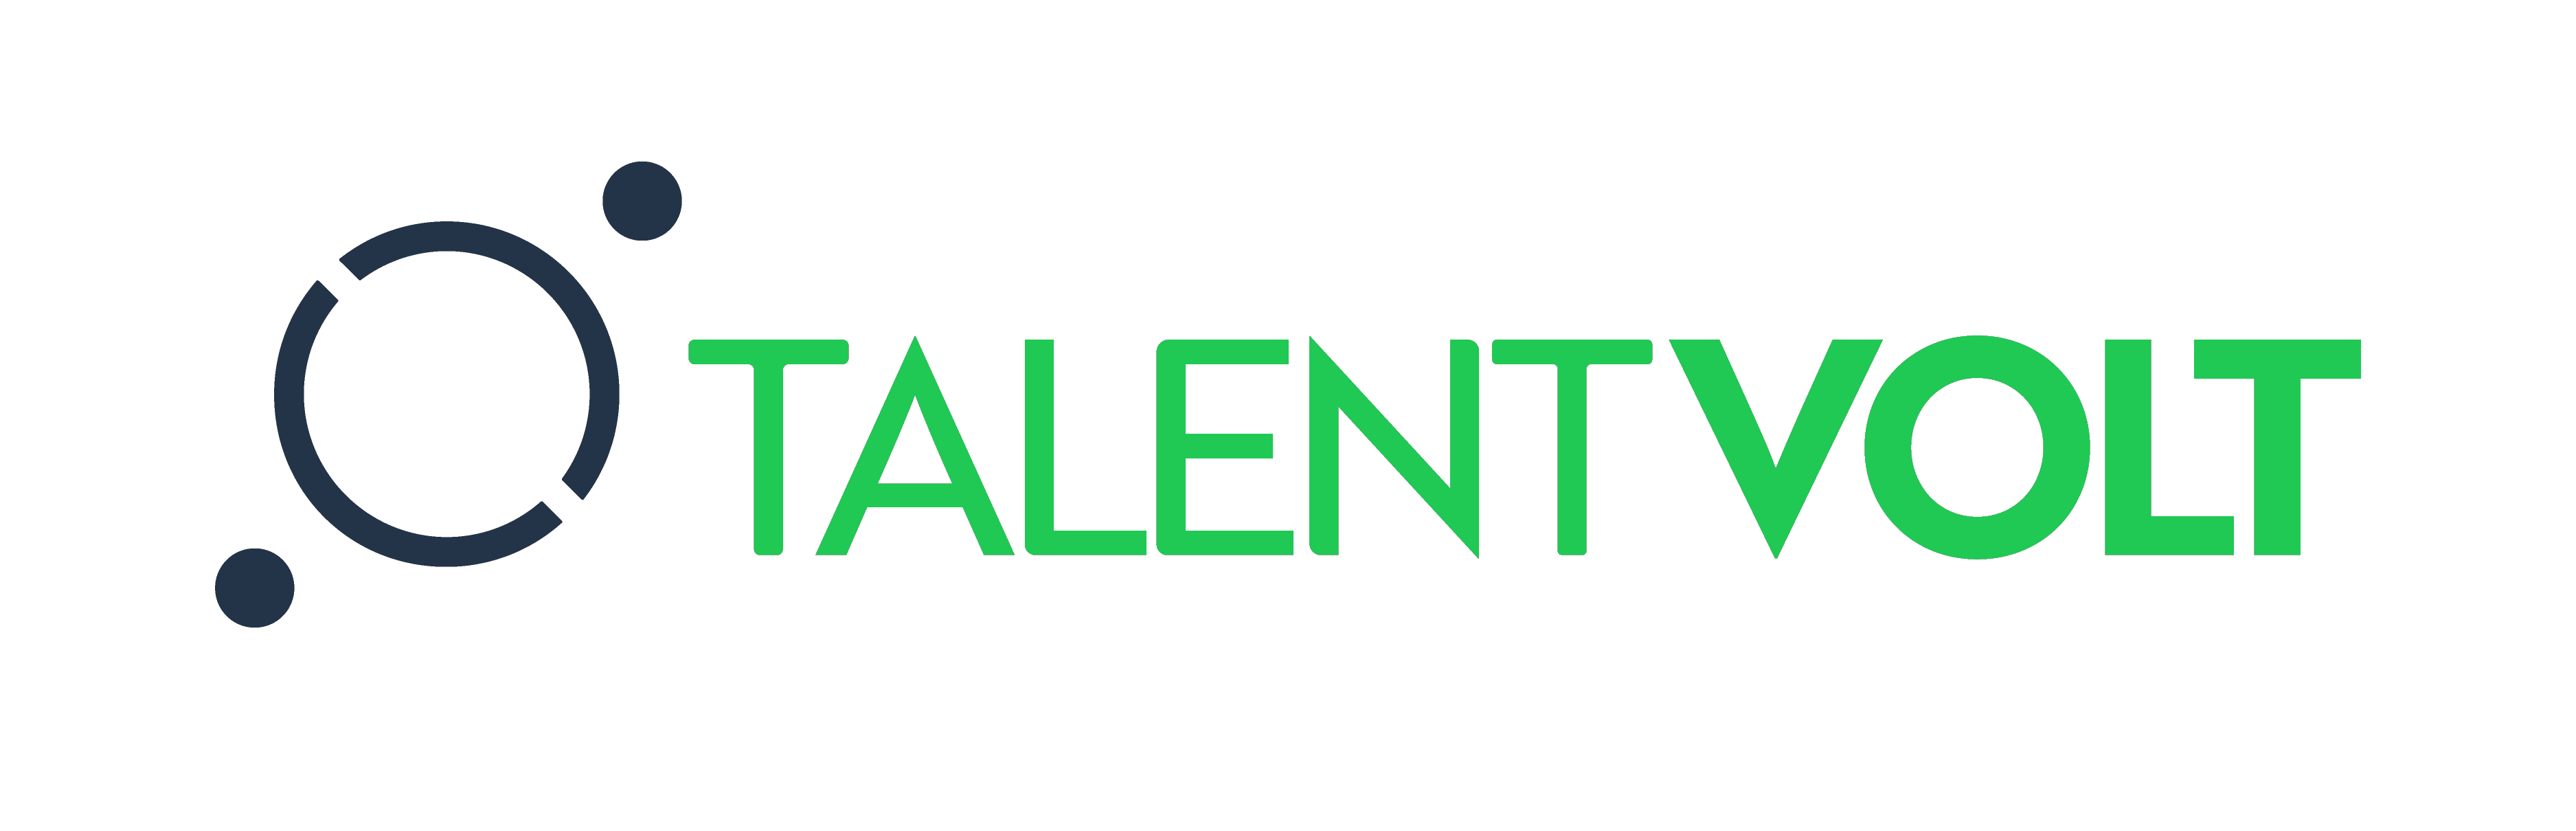 TalentVolt logo blue with green writing